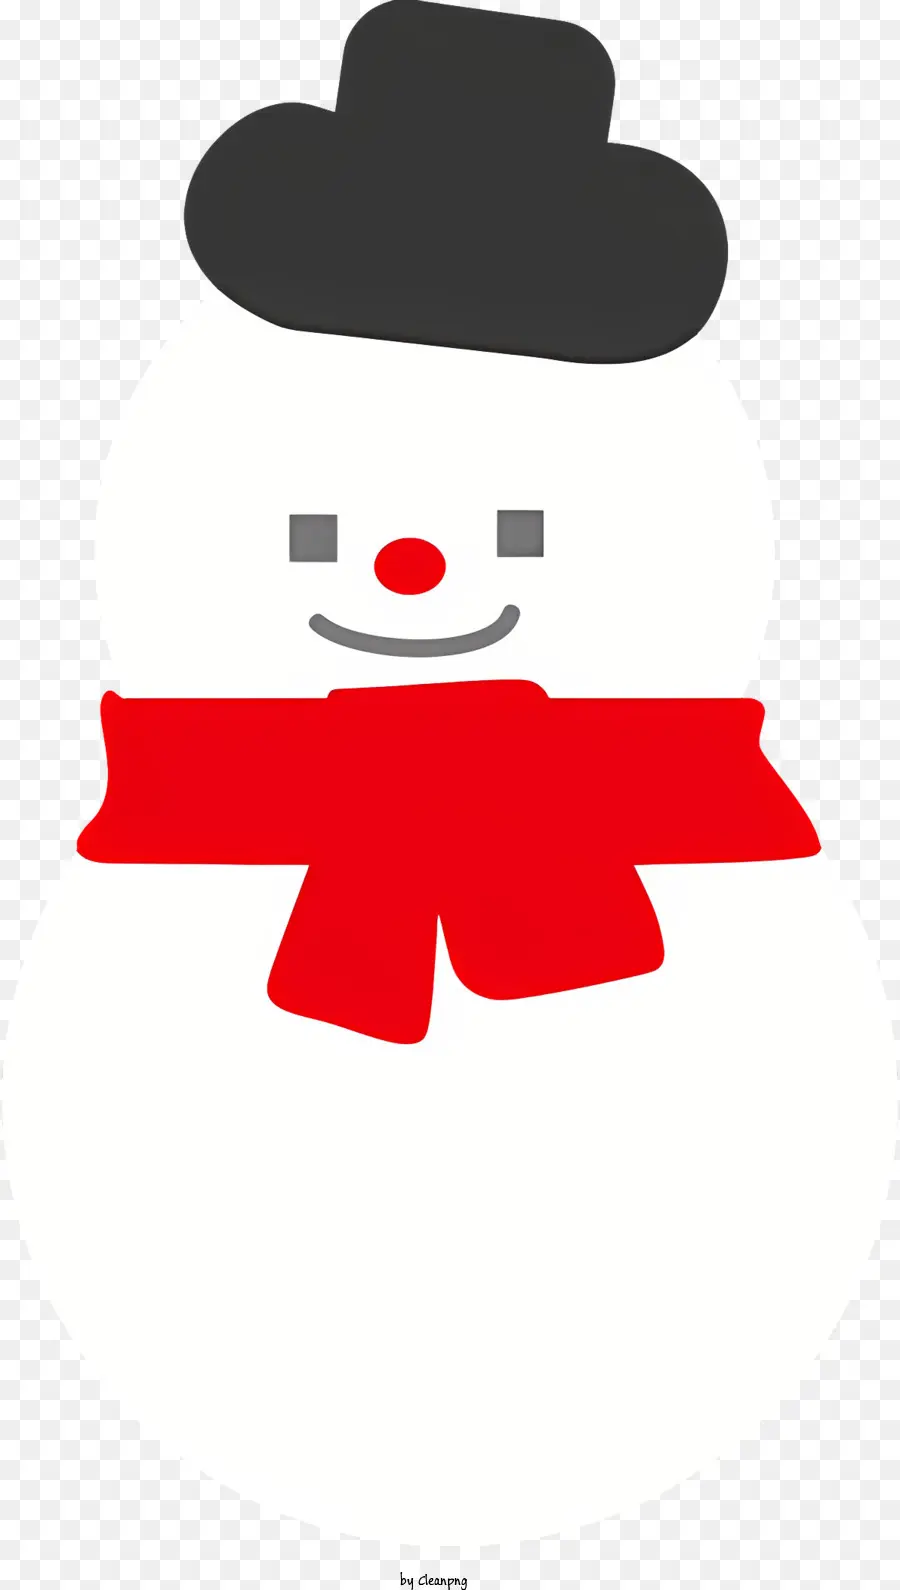 cartoon snowman black and white striped scarf black top hat white band black brim